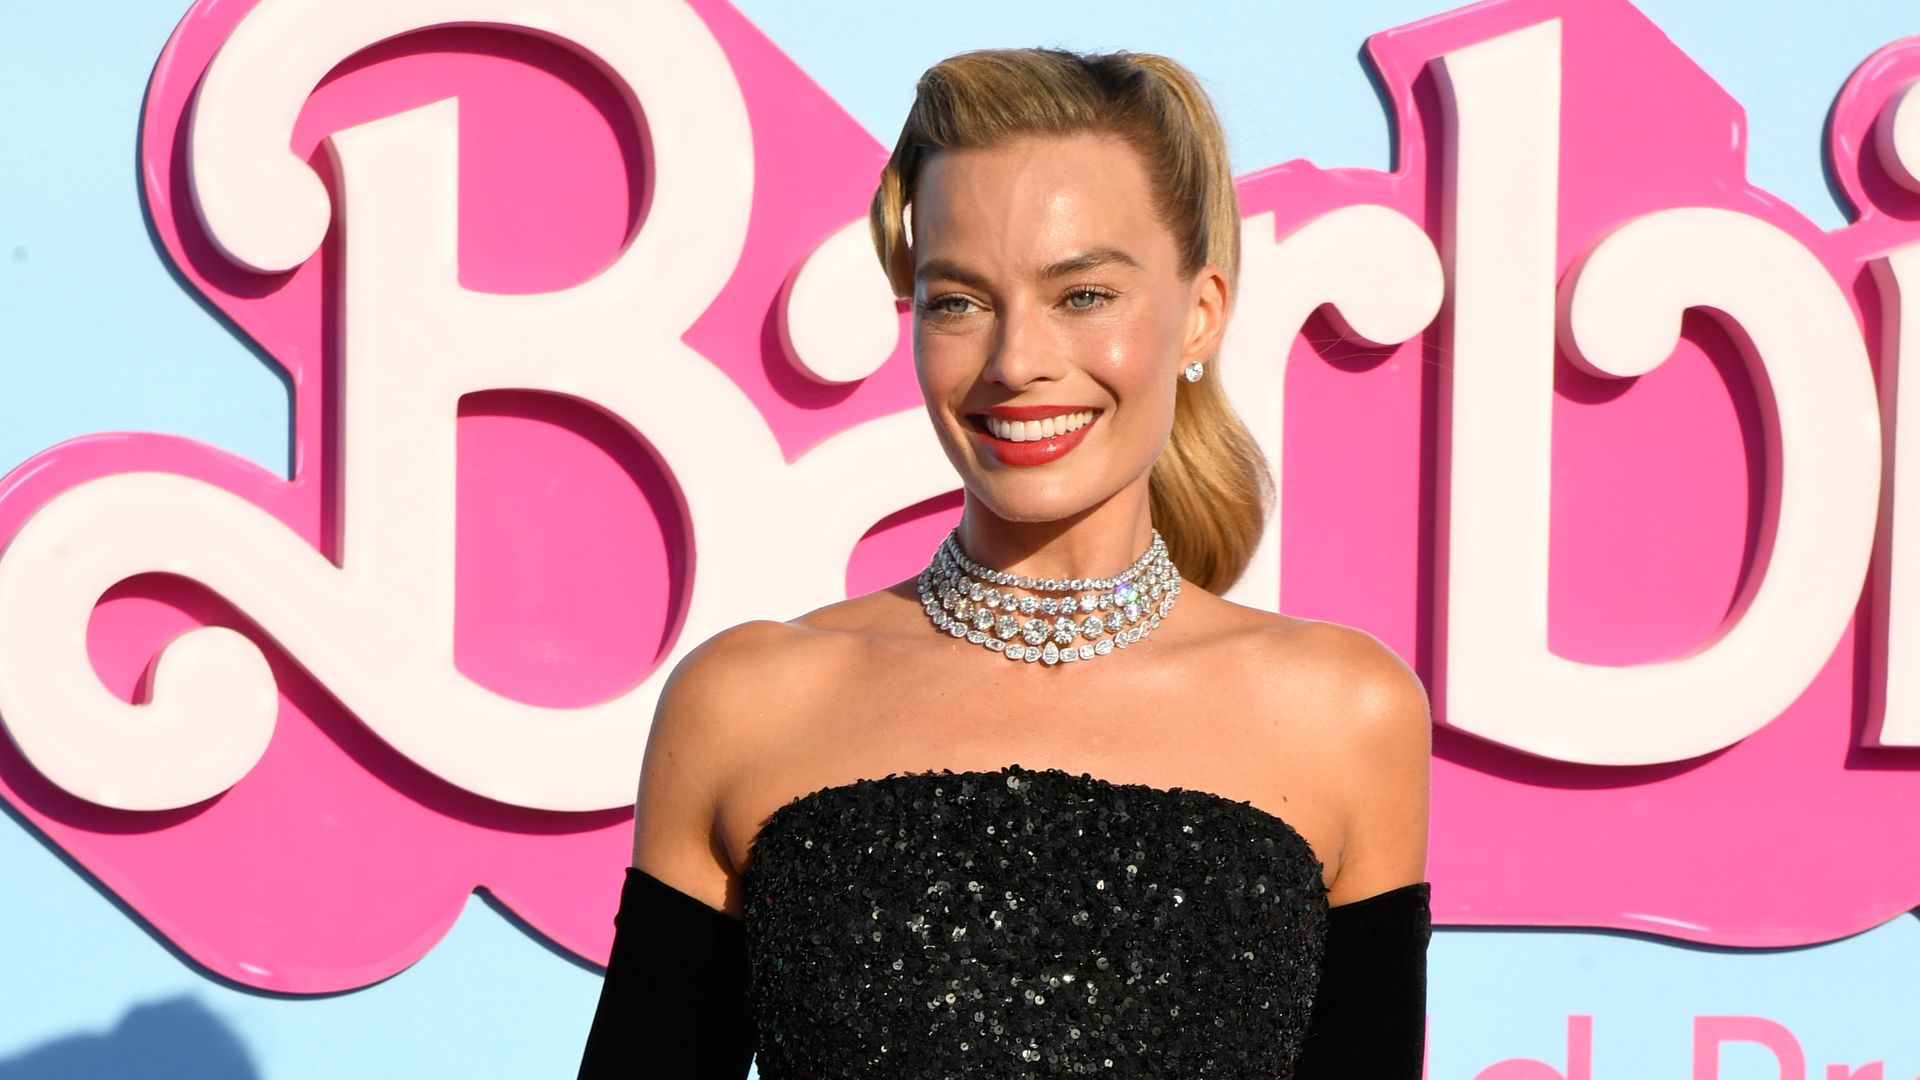 Margot Robbie steals the show in vintage-inspired look at Barbie world premiere